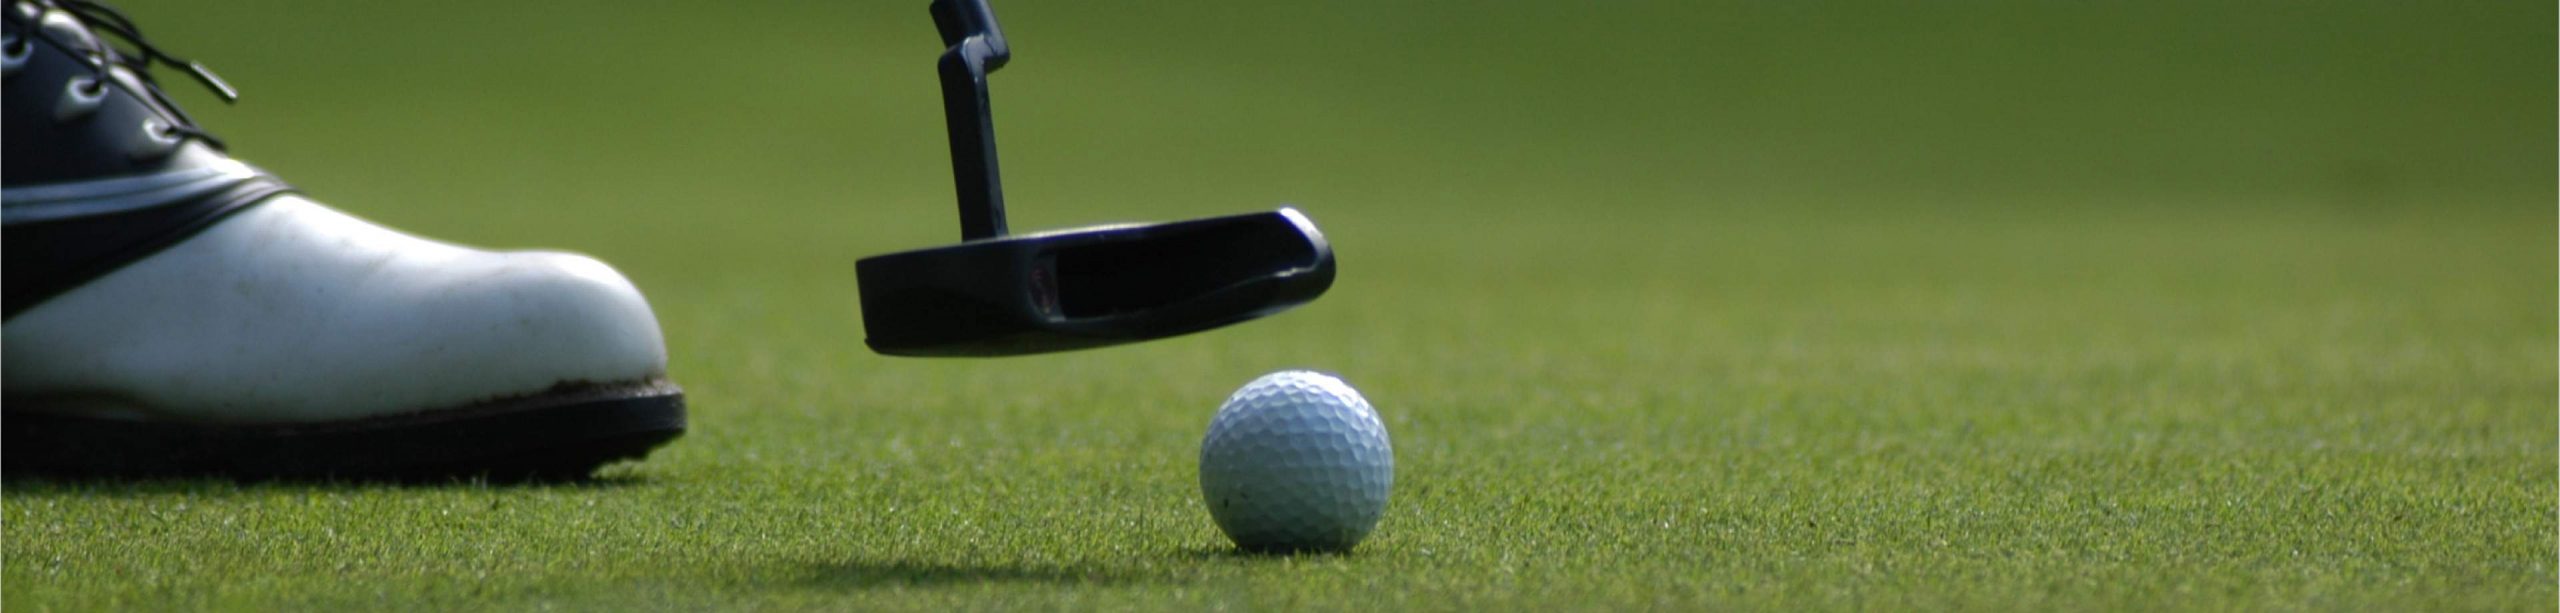 30th Eskenazi Health Foundation Golf Outing Rules Sheet